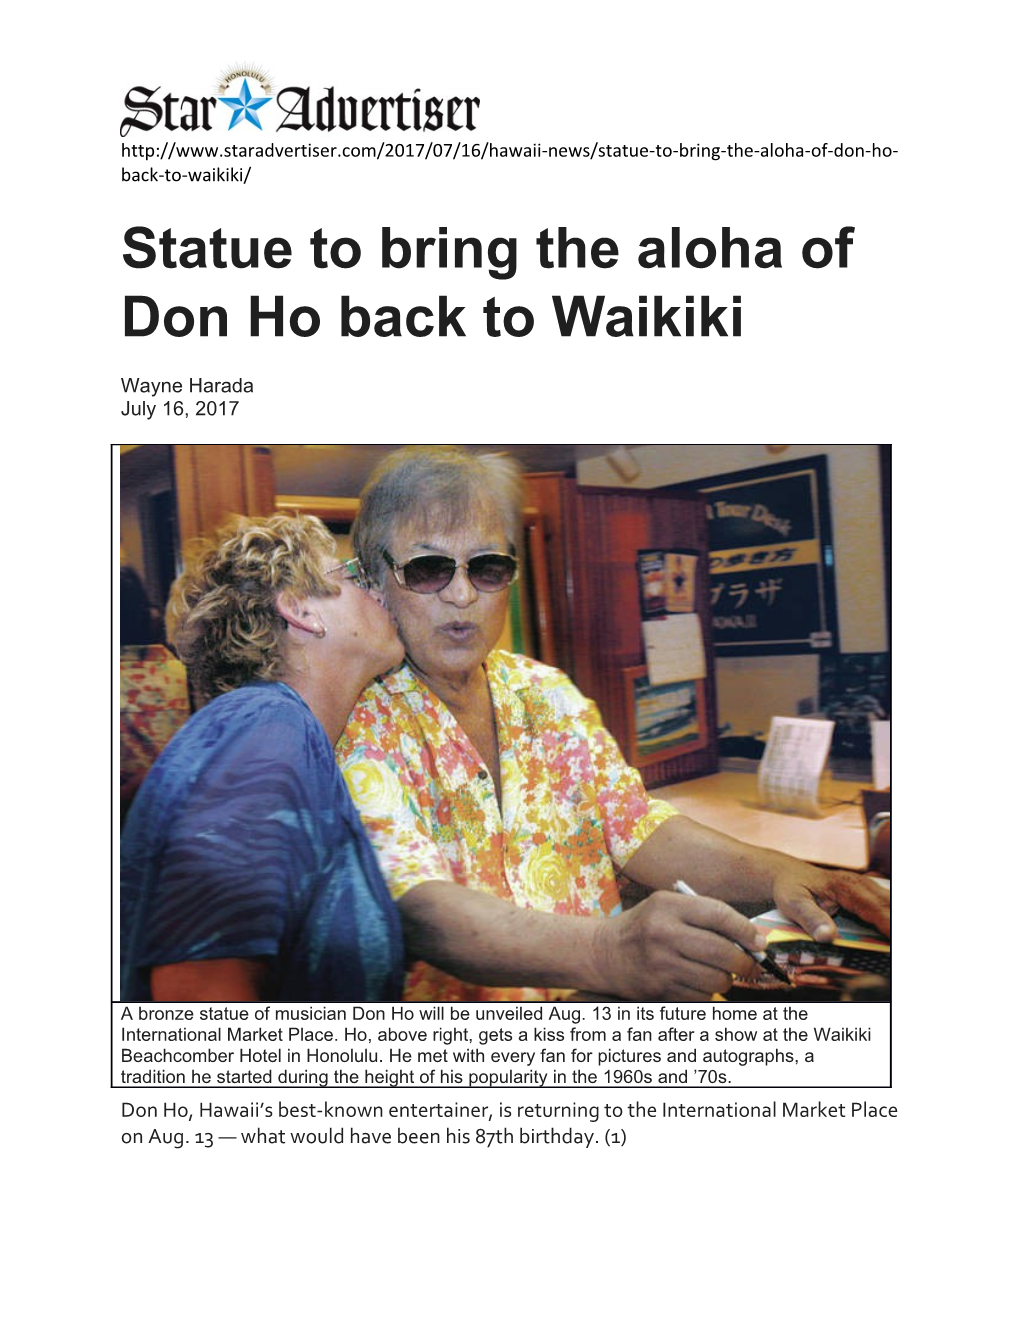 Statue to Bring the Aloha of Don Ho Back to Waikiki